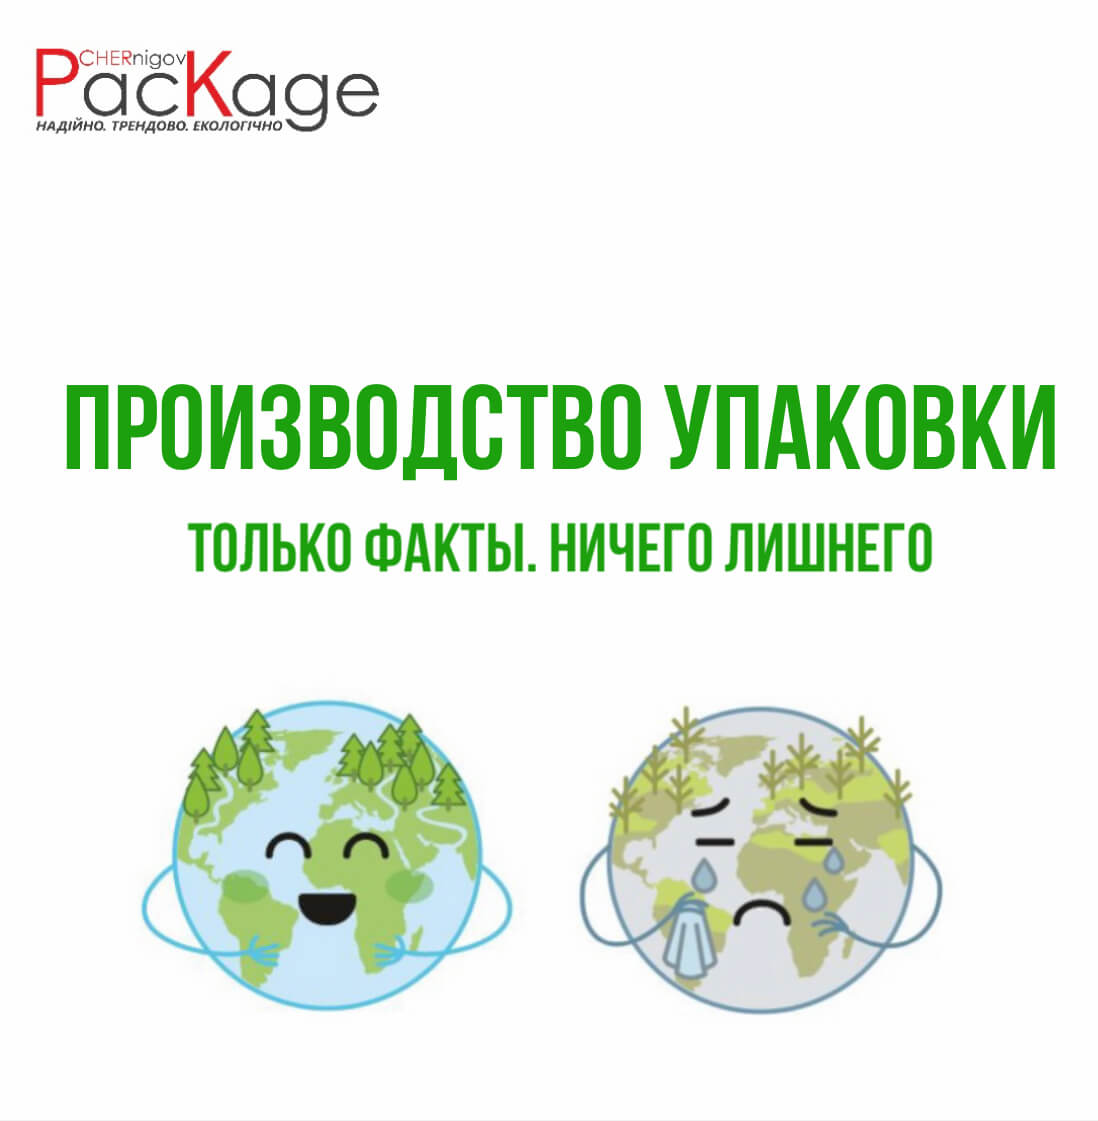 Влияние упаковки на будущее Chernigov Package - Photo изображение_viber_2021-11-18_10-50-46